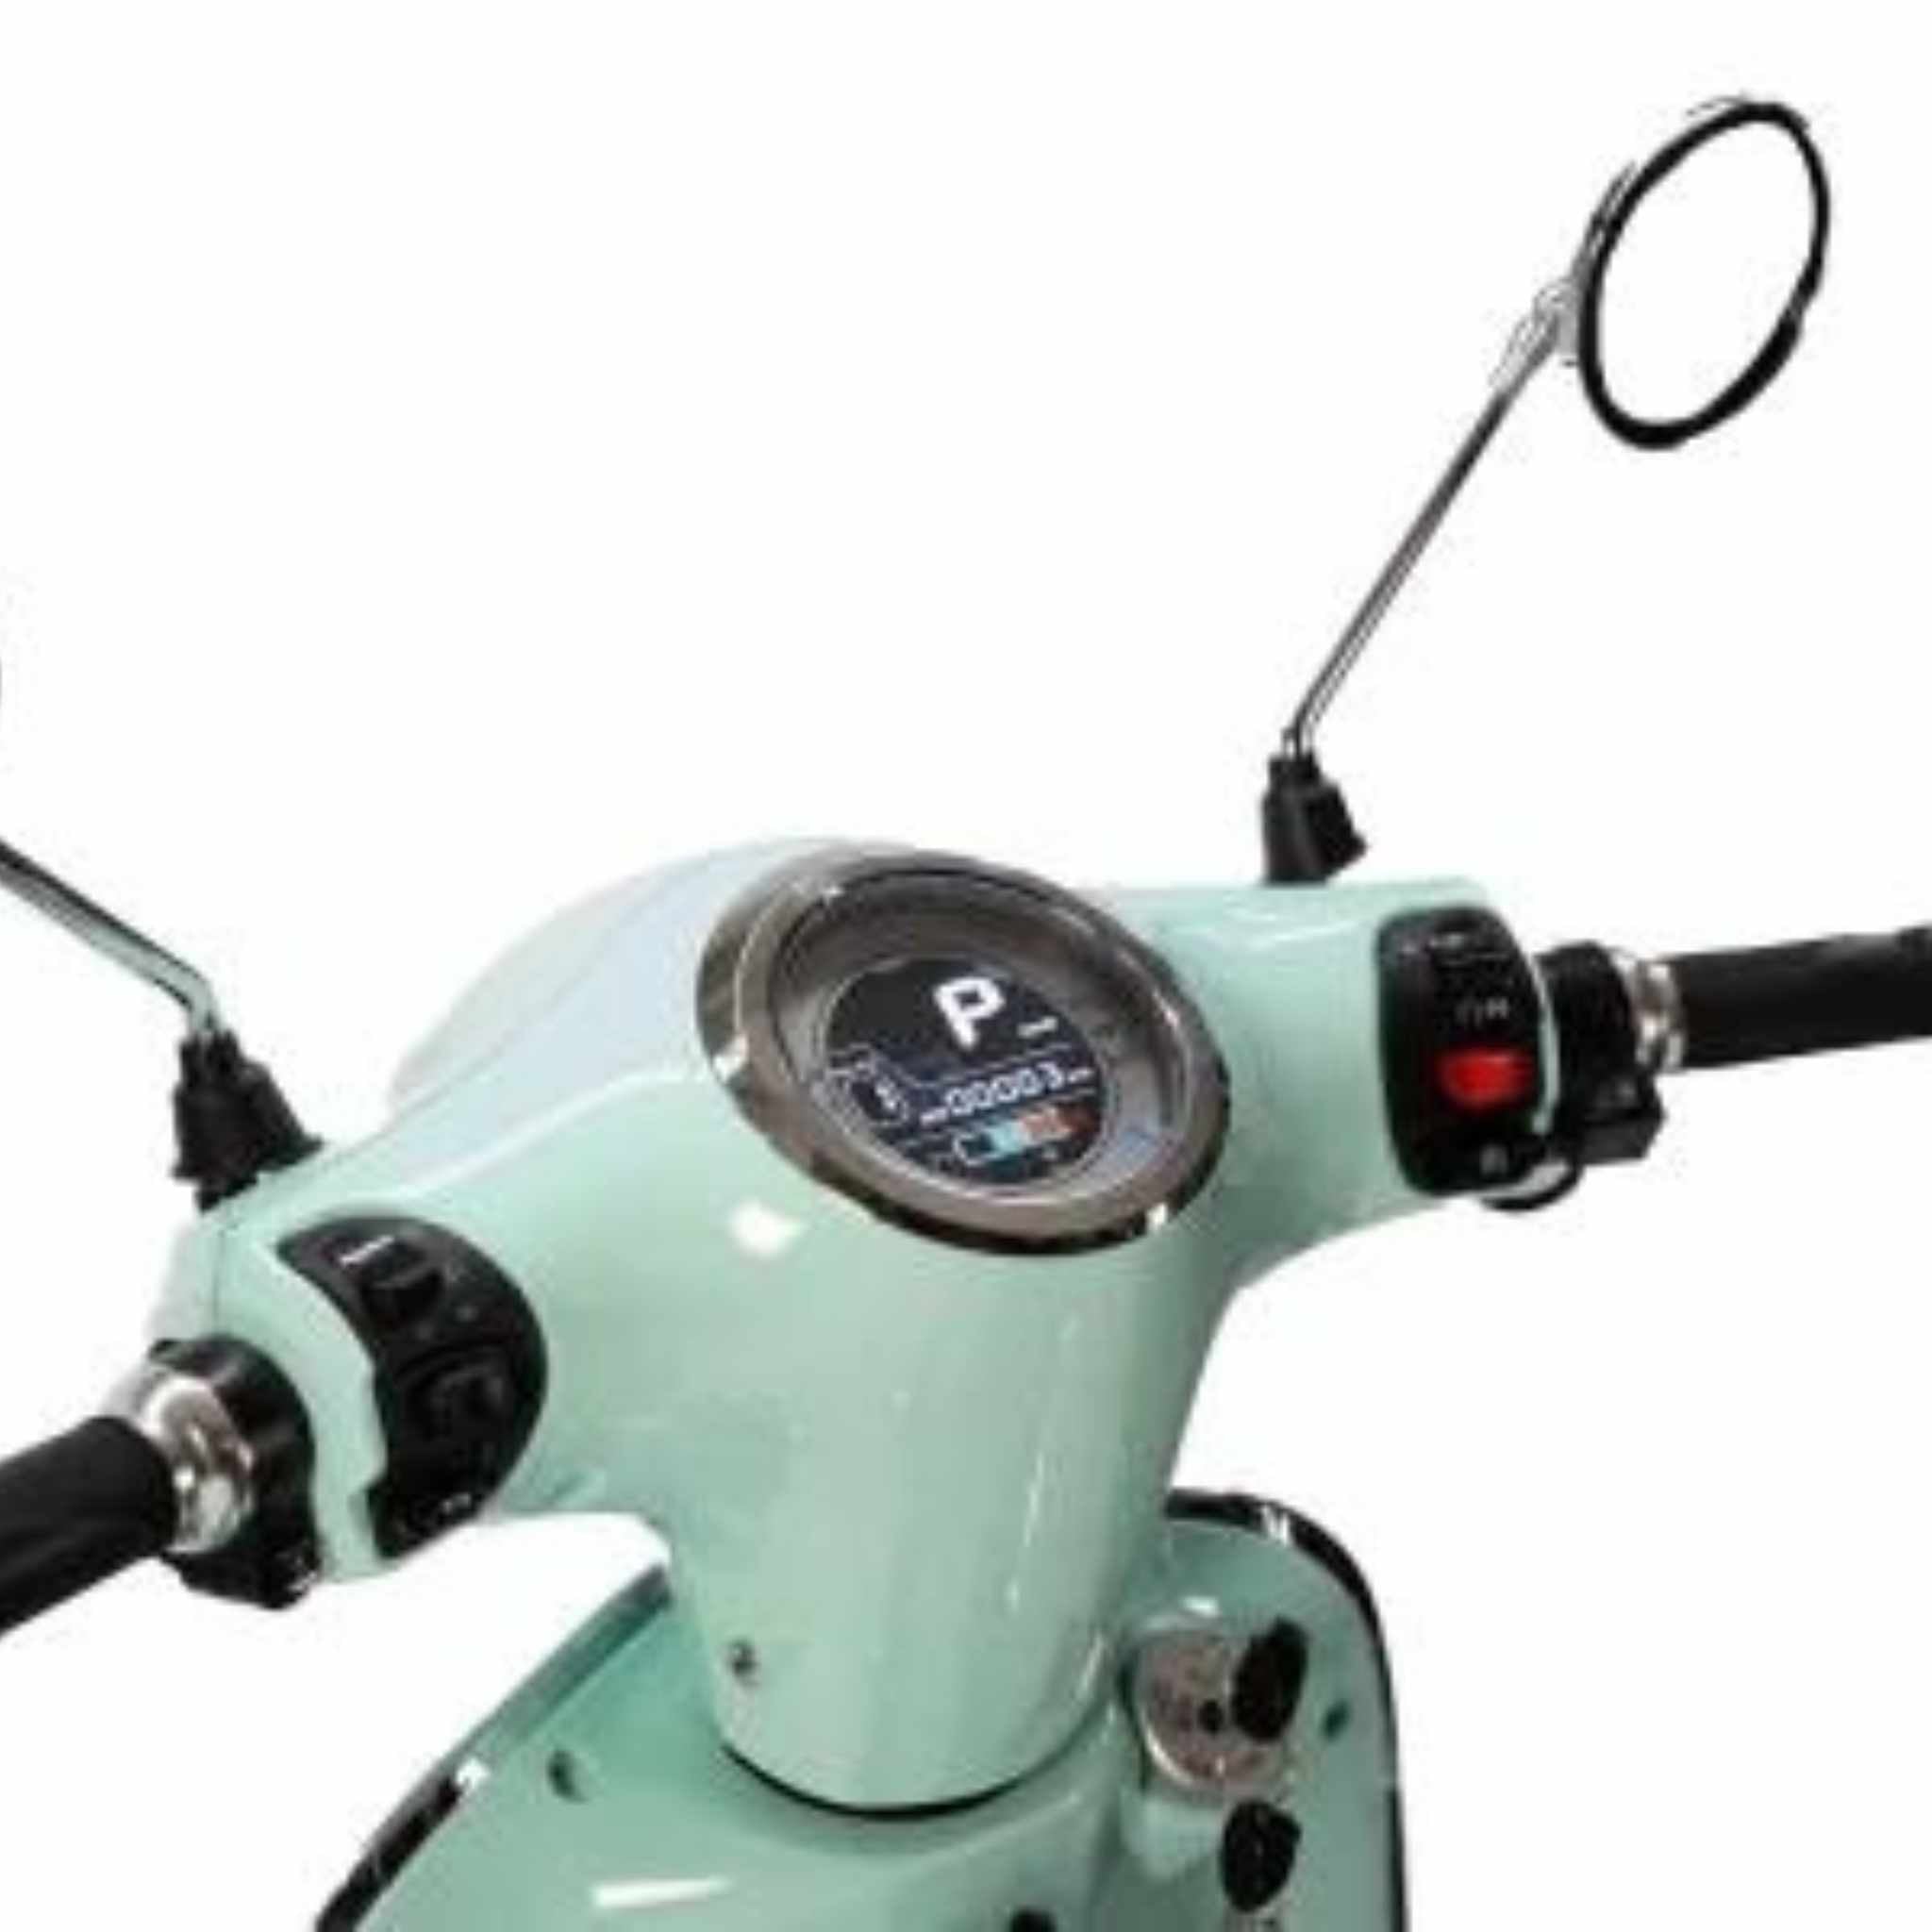 E-Motorroller: CityTwister 2.0 OCEAN 45 km/h - Das Original!